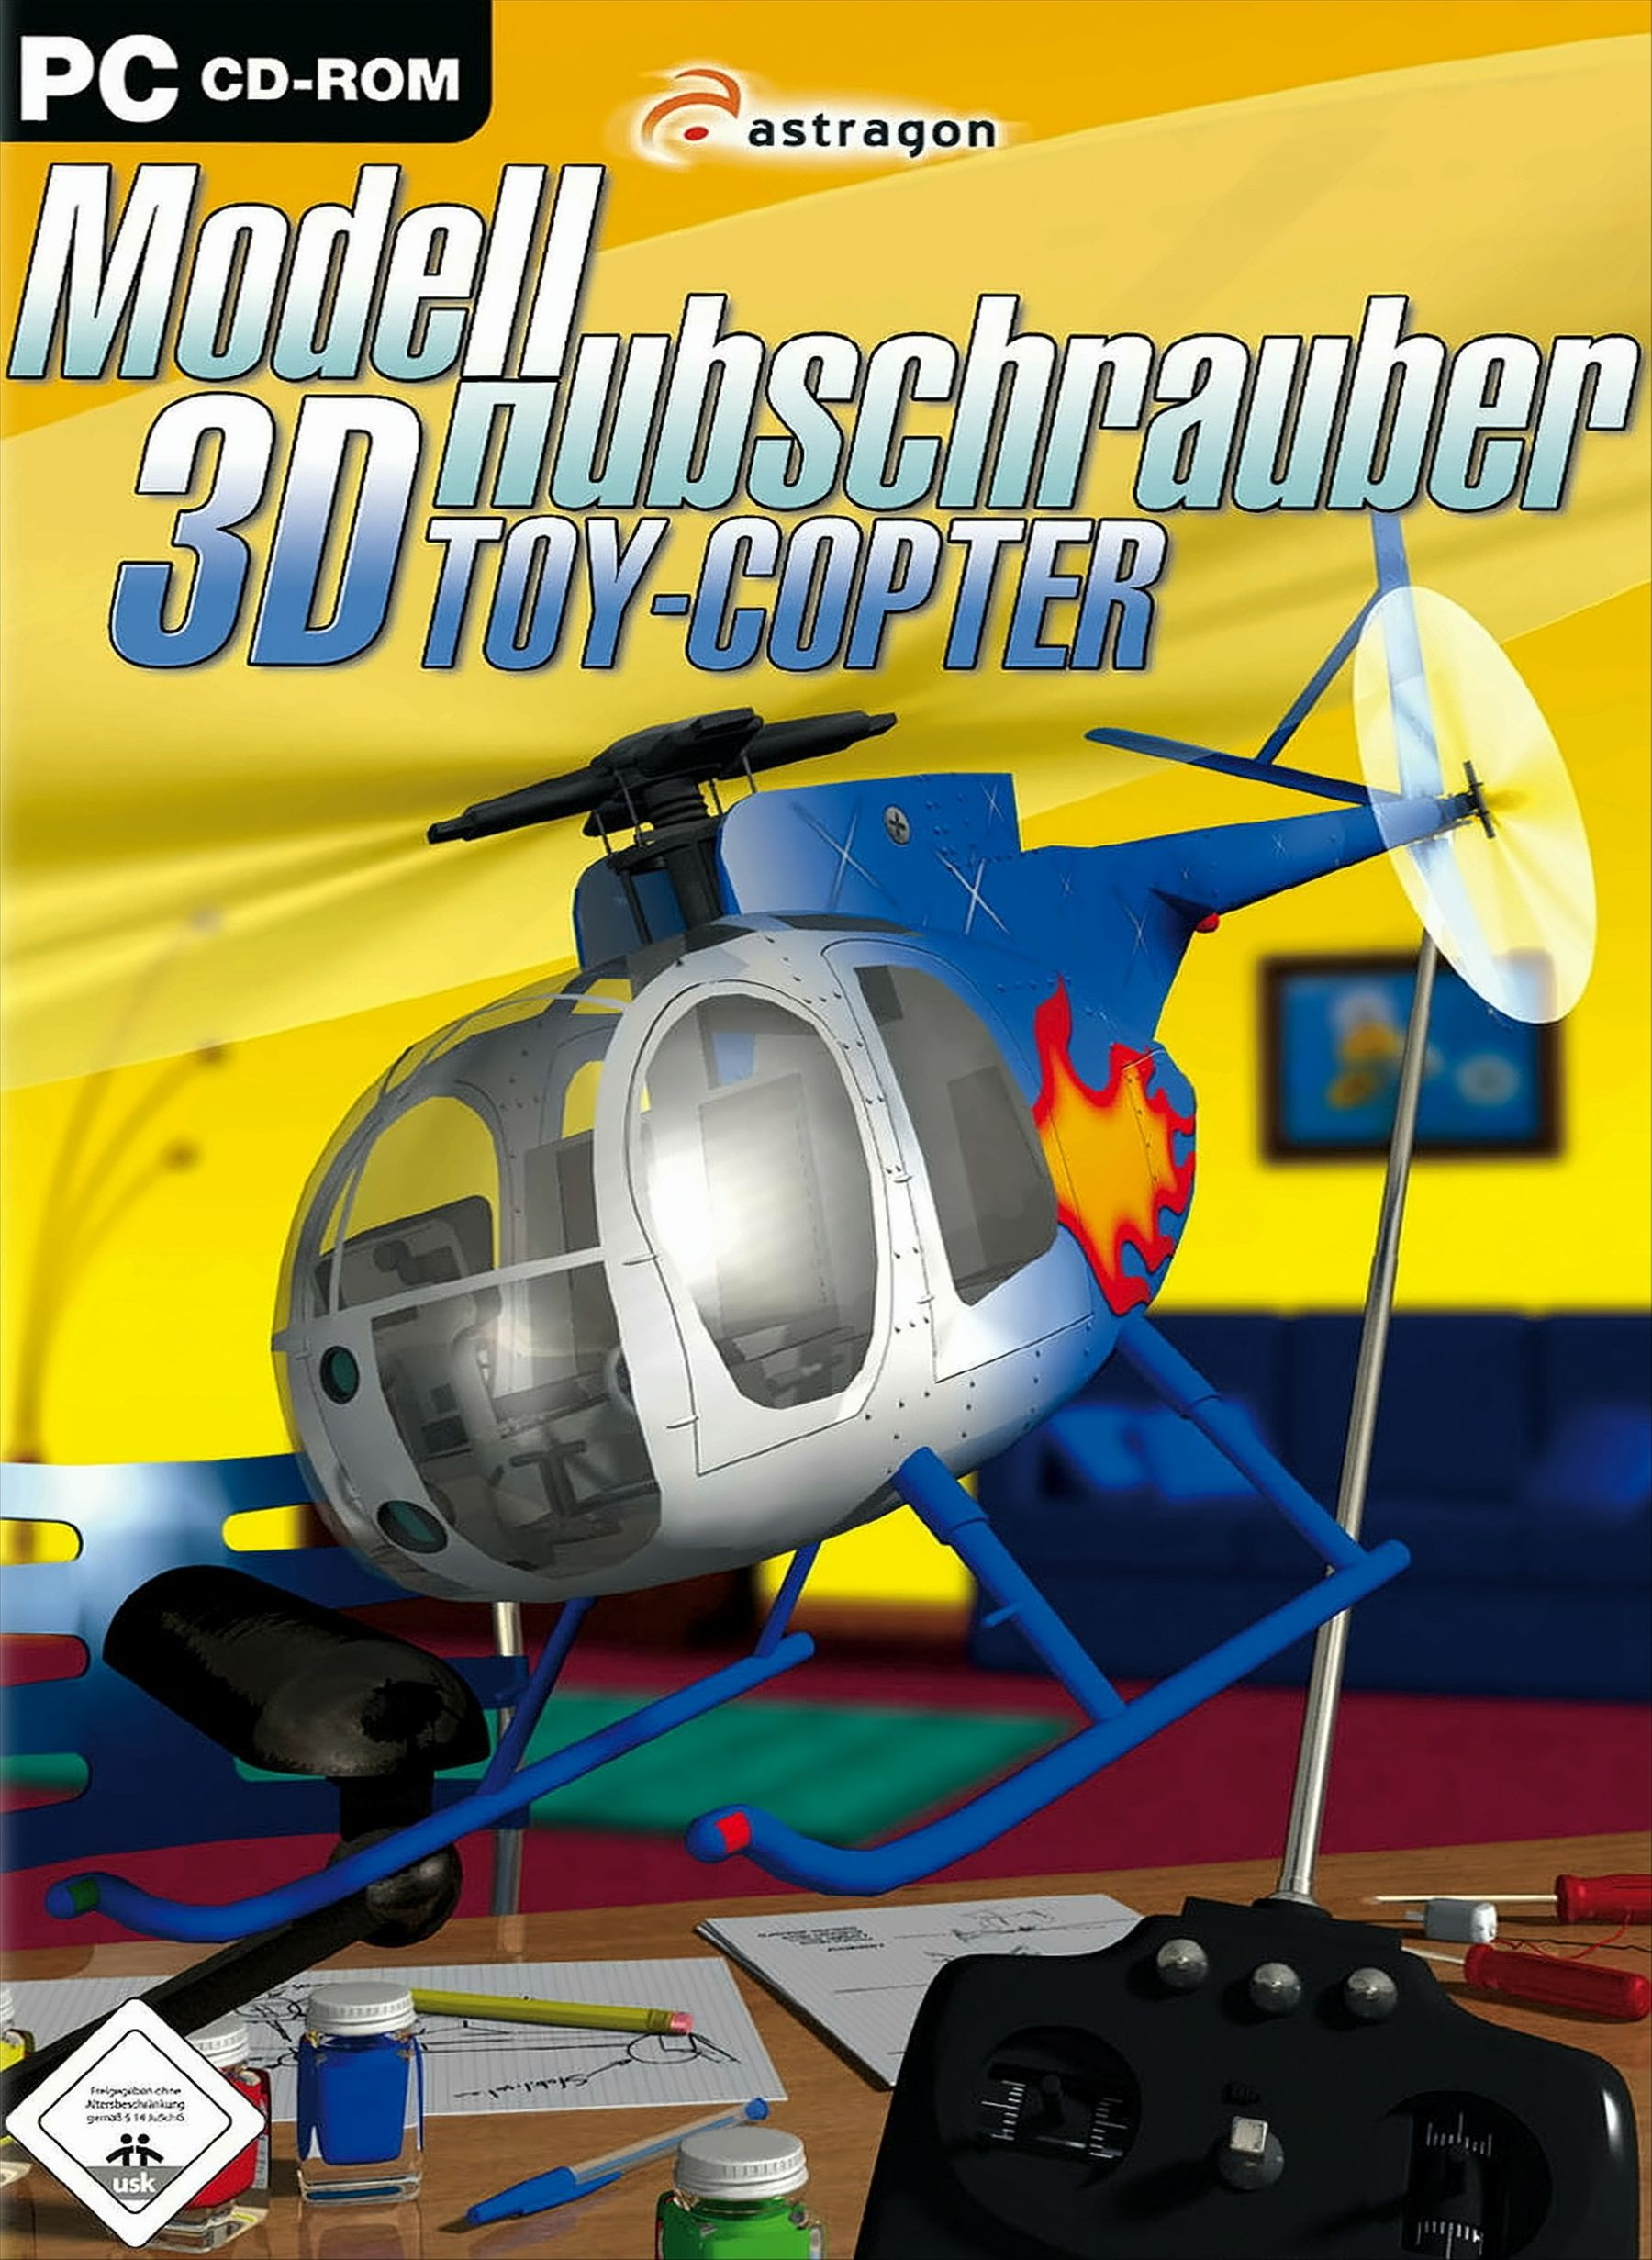 Modellhubschrauber 3D - ToyCopter [PC